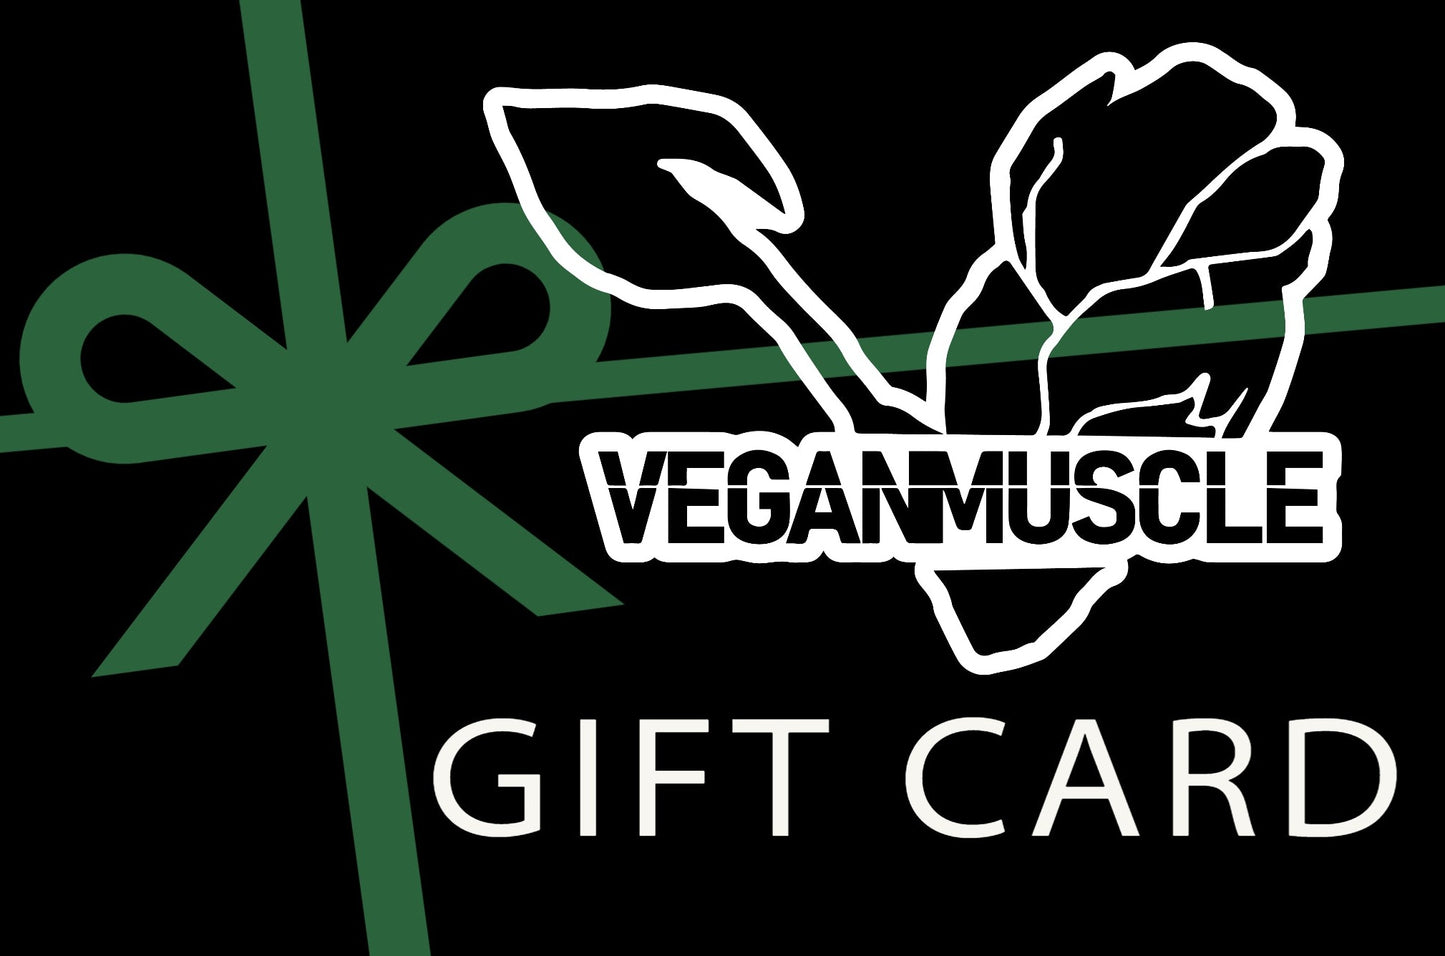 Vegan Muscle Gym Wear - Gift Card